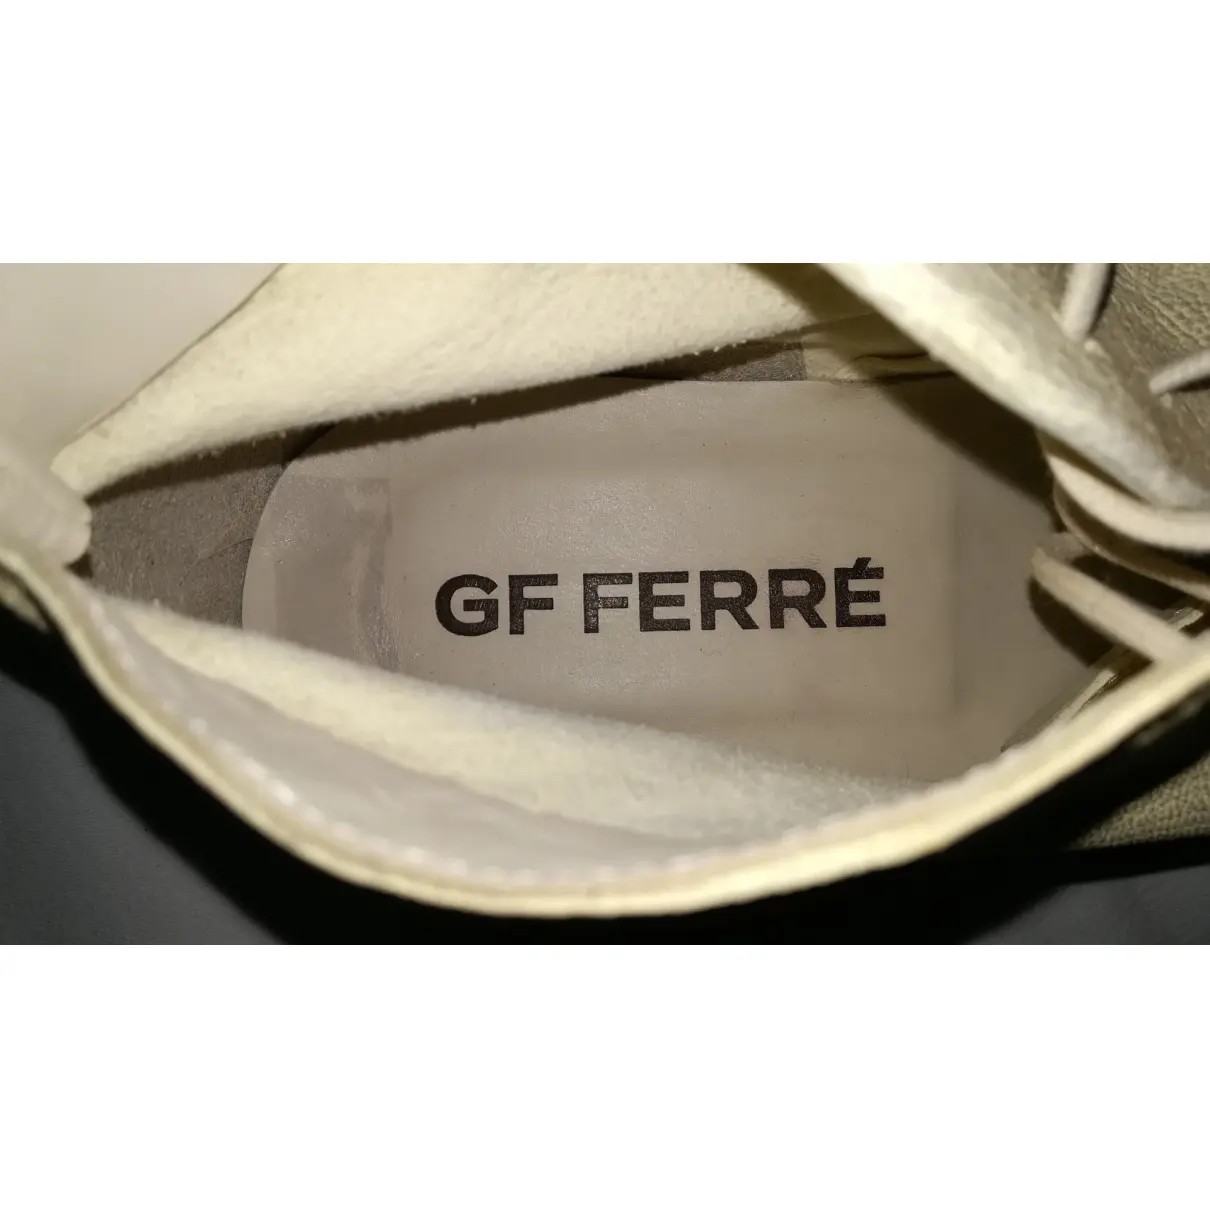 Leather lace ups Gianfranco Ferré